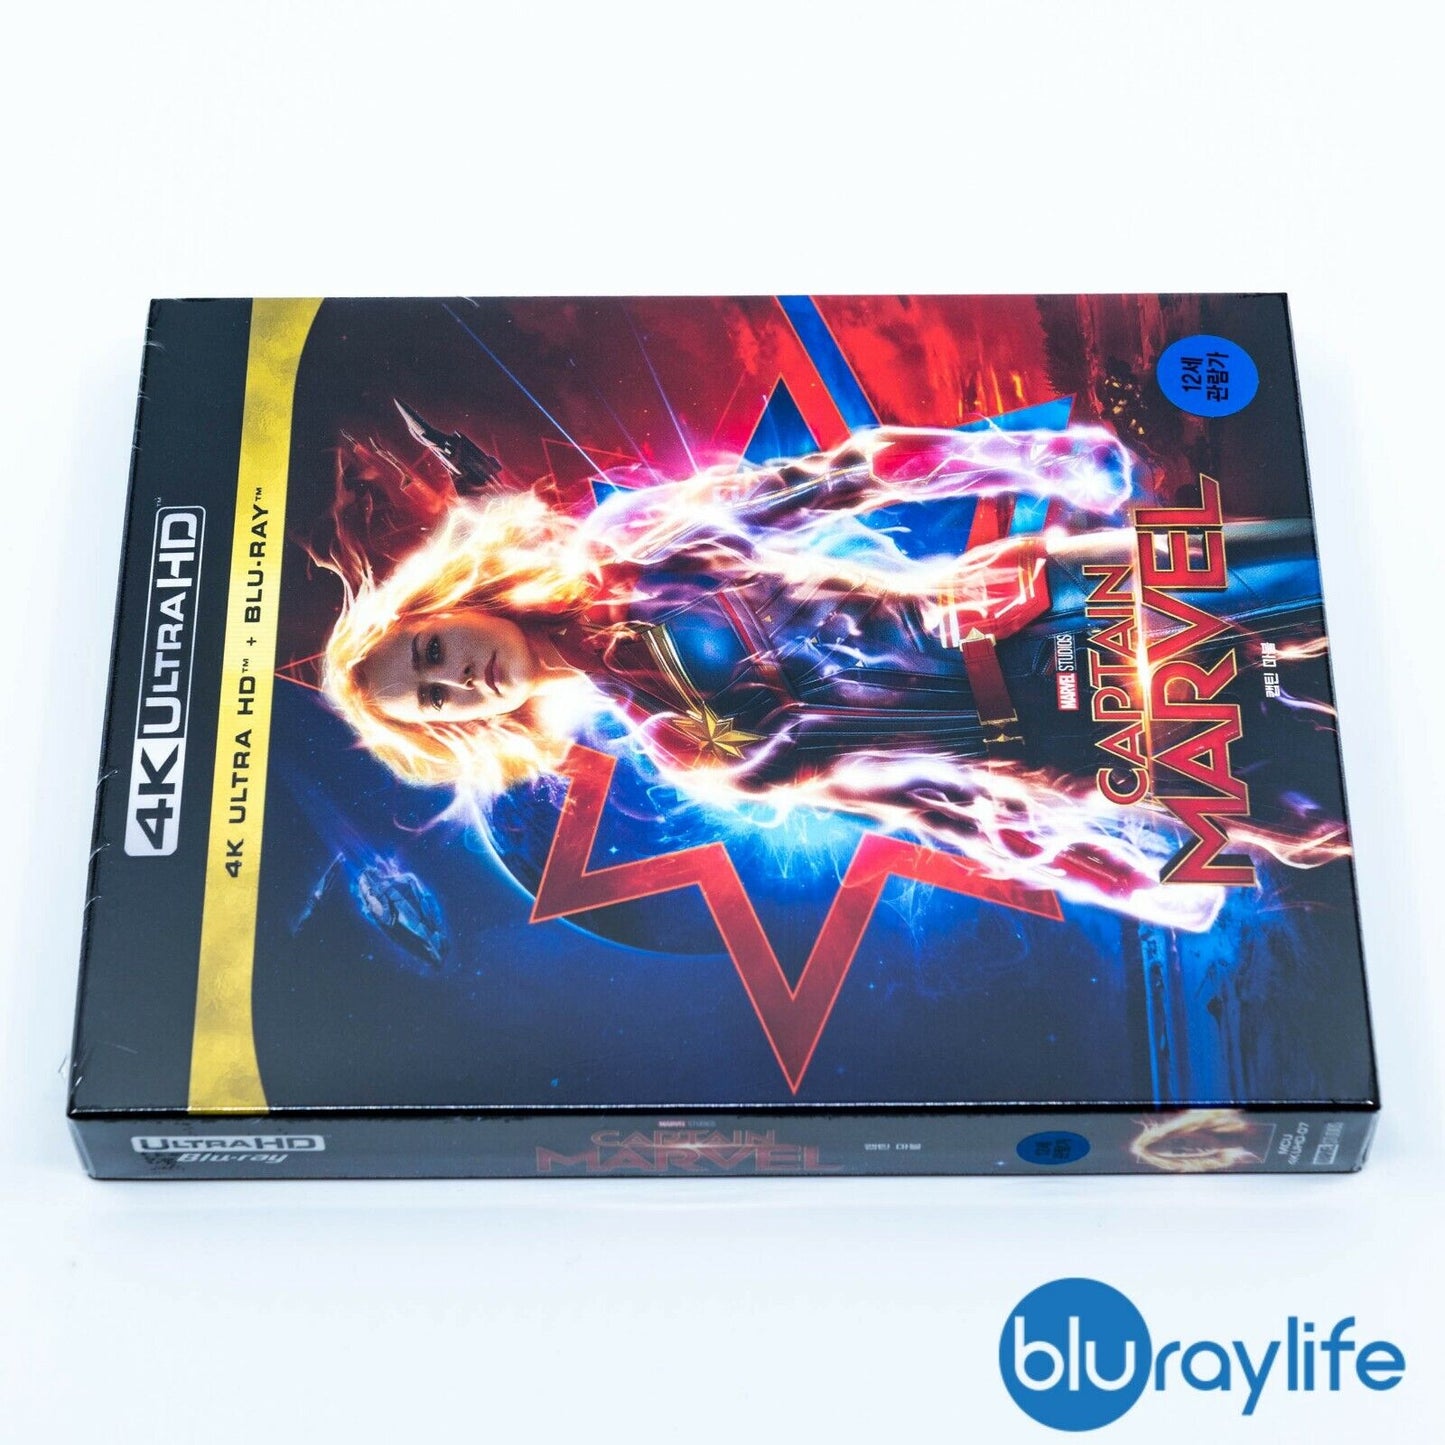 Captain Marvel 4K + 2D Blu-ray Steelbook SM Life Design Exclusive Full Slip